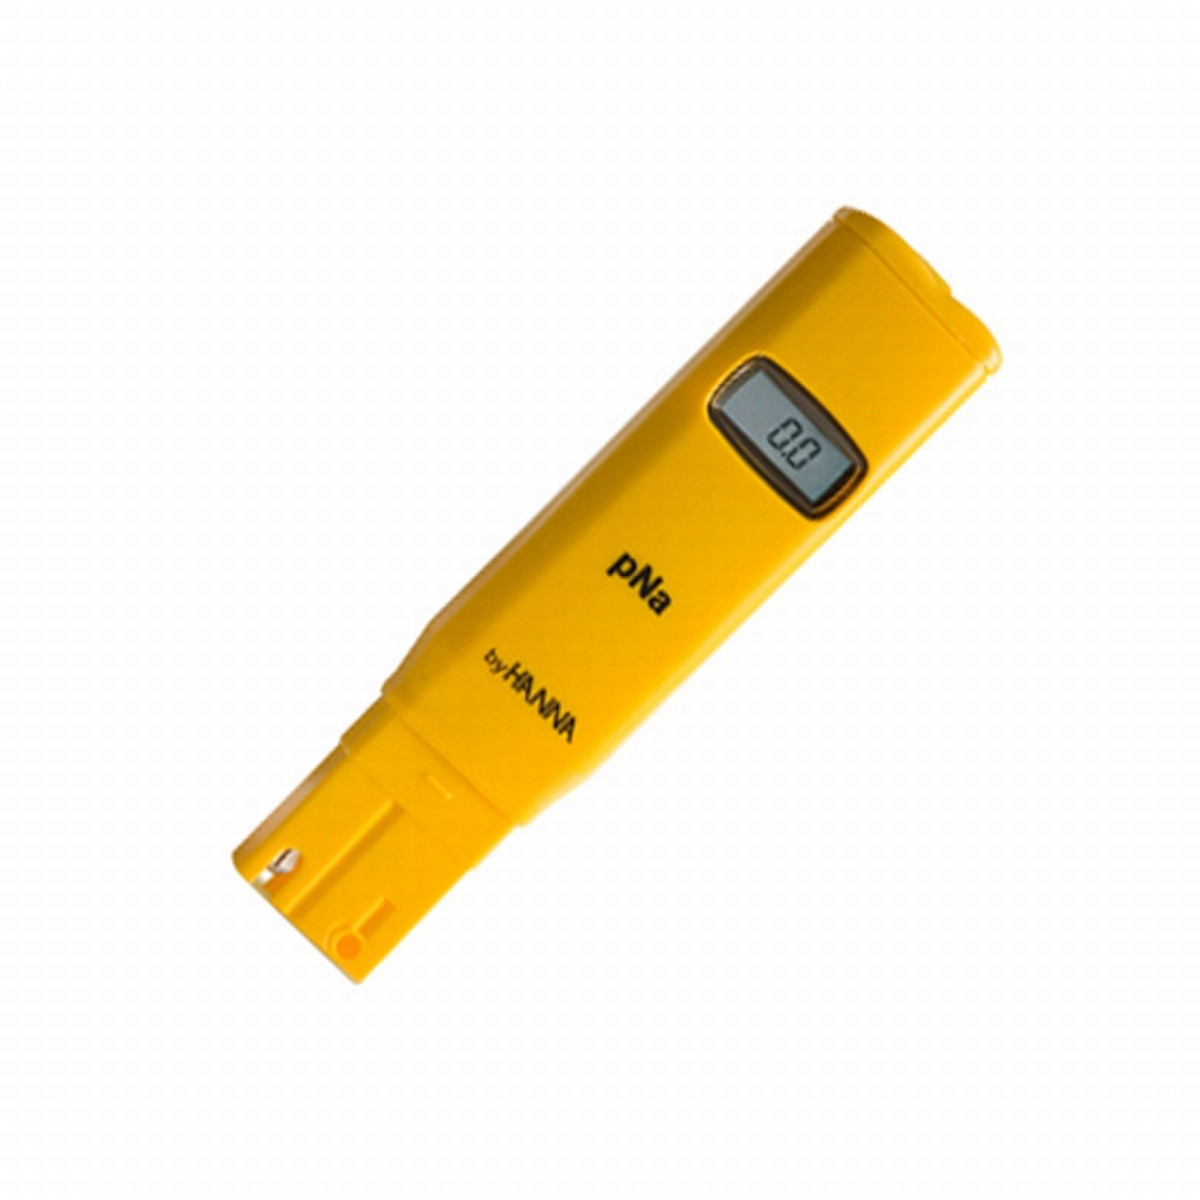 HANNA HI98202 pNa Portable Economy Pocket Water Hardness/Softness Tester